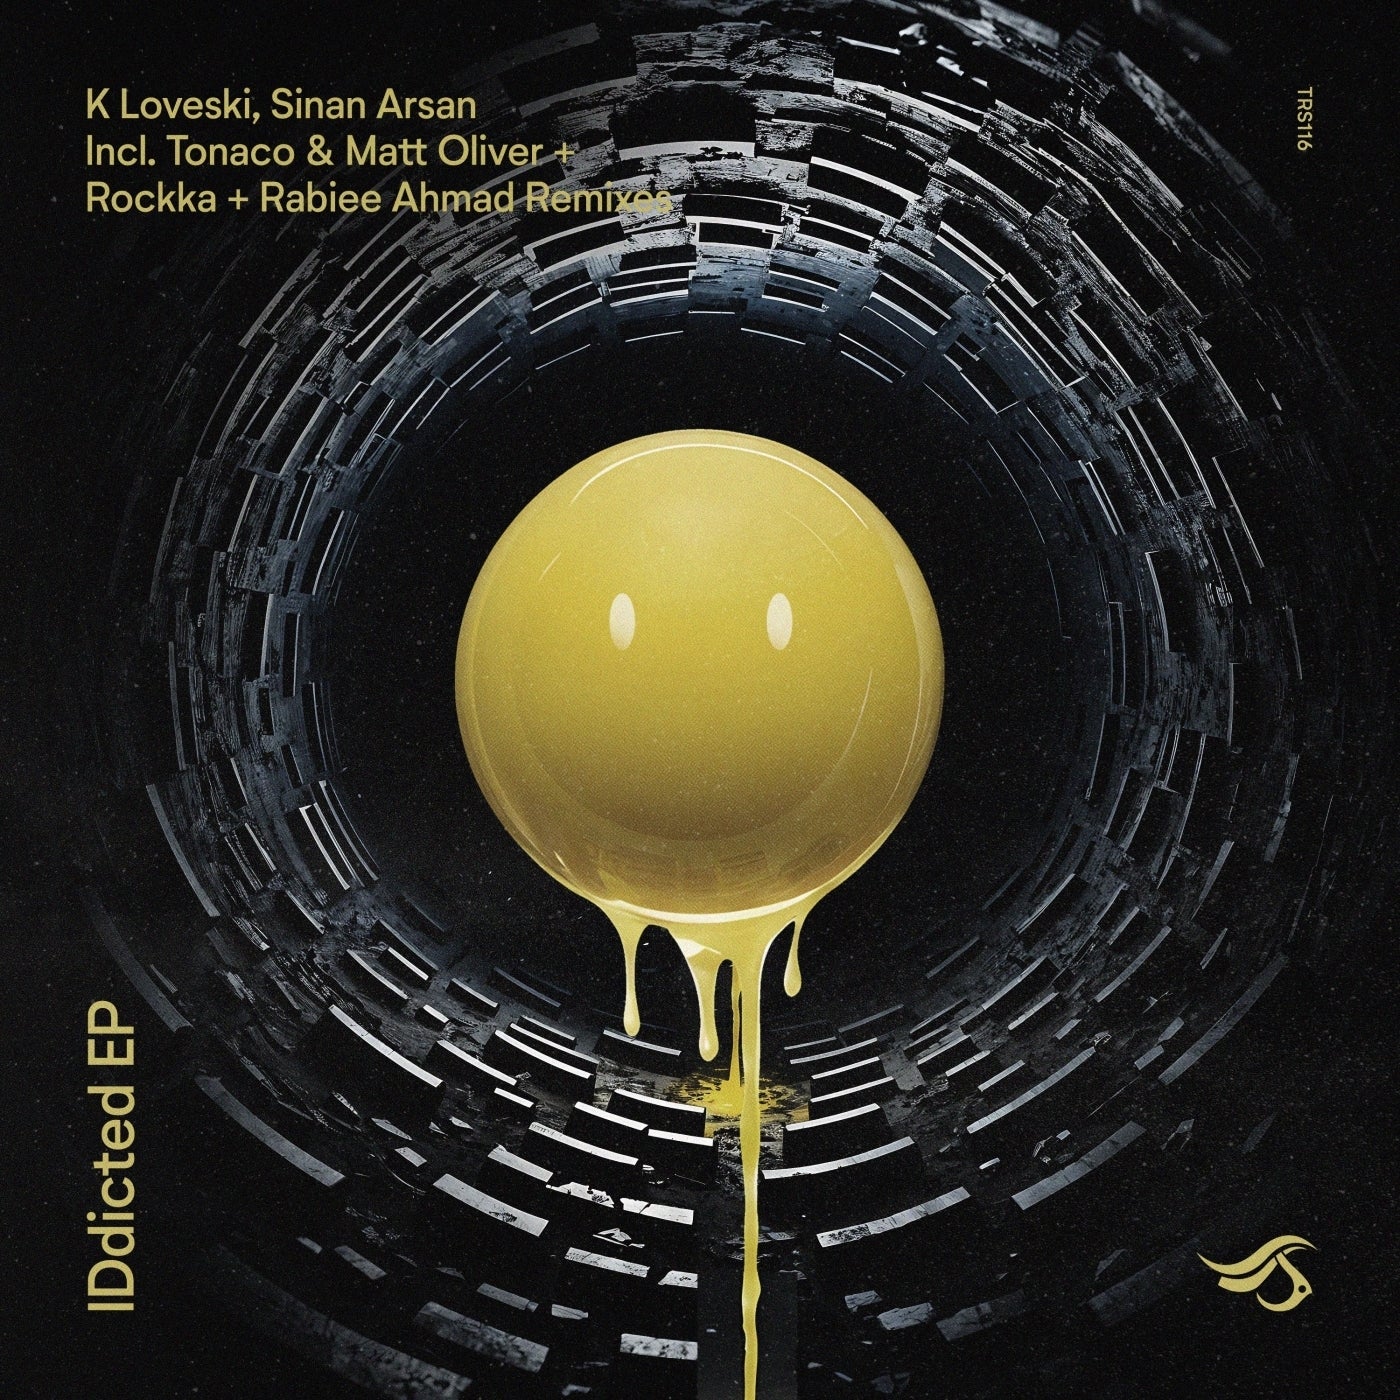 Cover - K Loveski, Sinan Arsan - IDdicted (Rabiee Ahmad Remix)